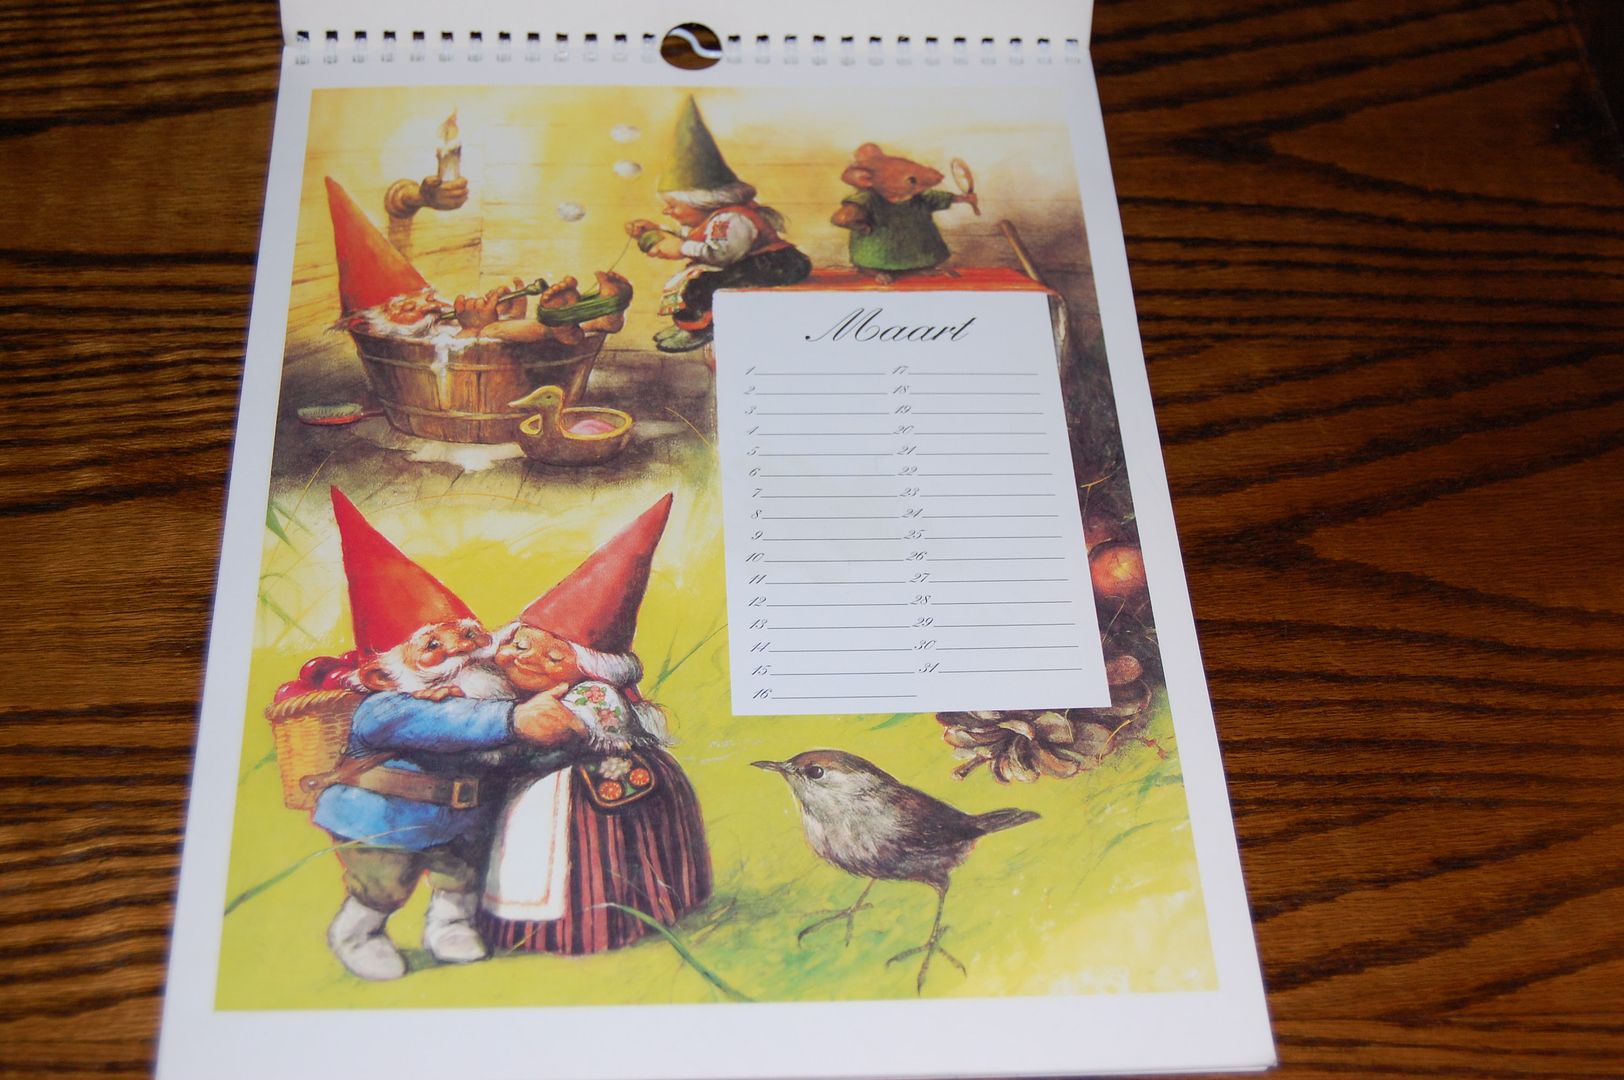 Rien Poortvliet David the Gnome Kabouter Birthday Calendar Dutch Month